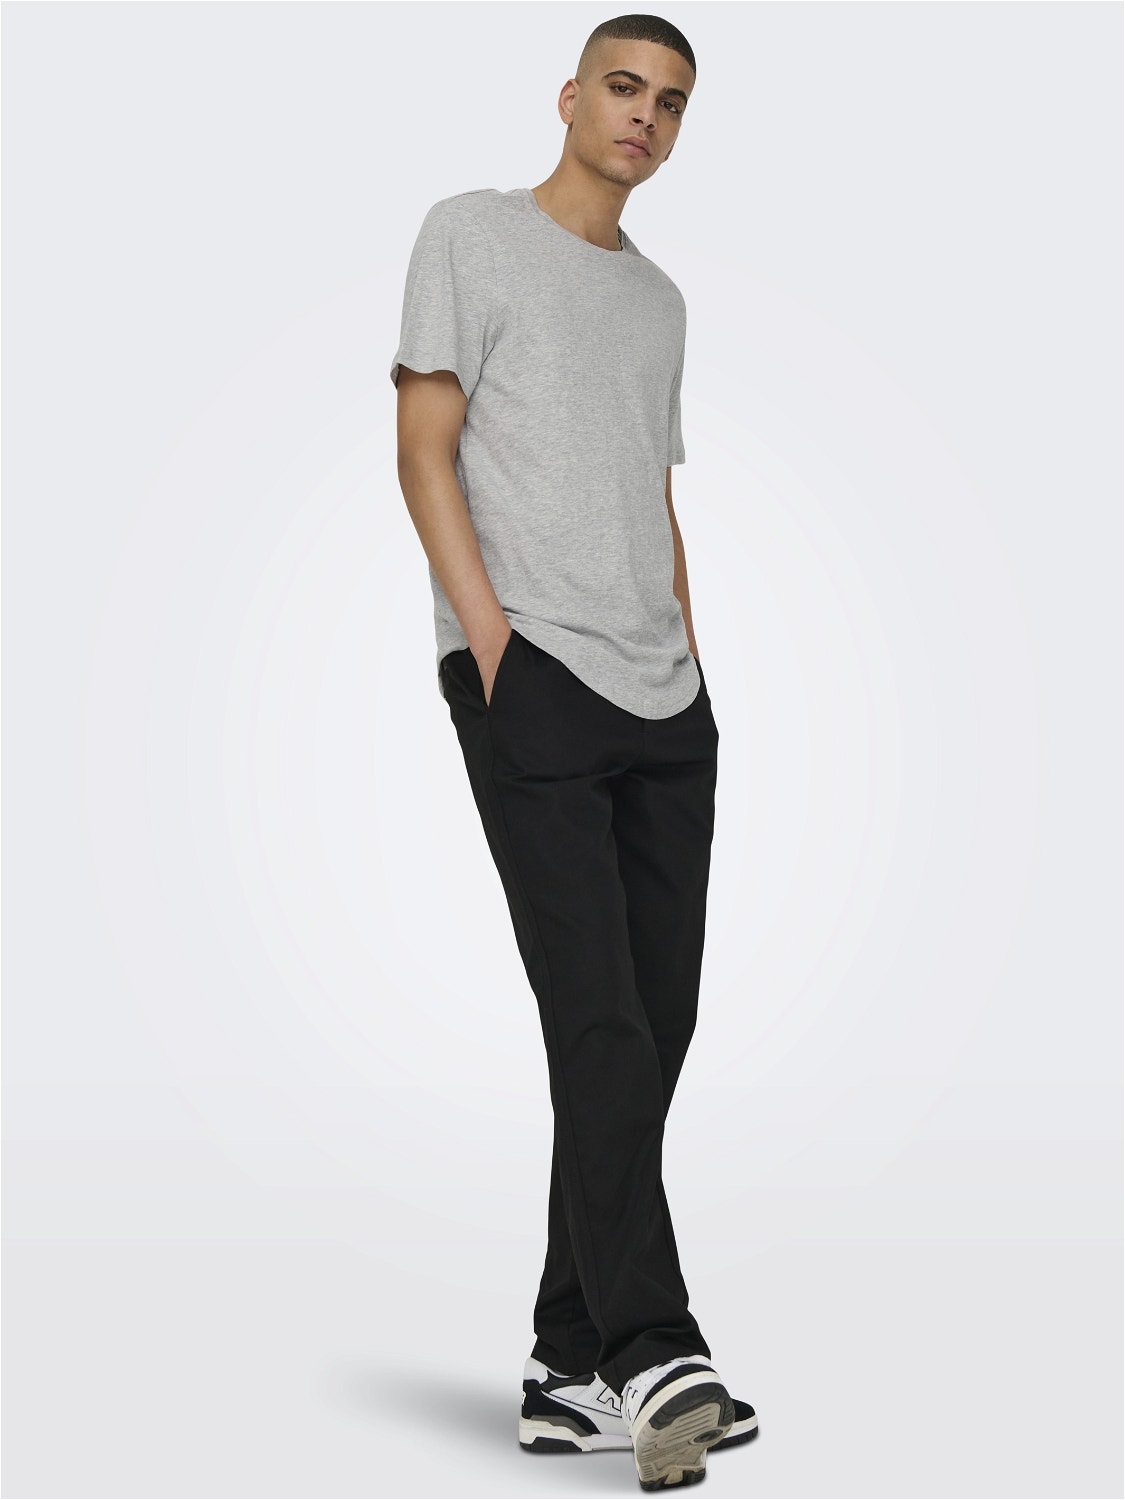 ONLY & SONS Long Line Fit Round Neck T-Shirt -Light Grey Melange - 22002973